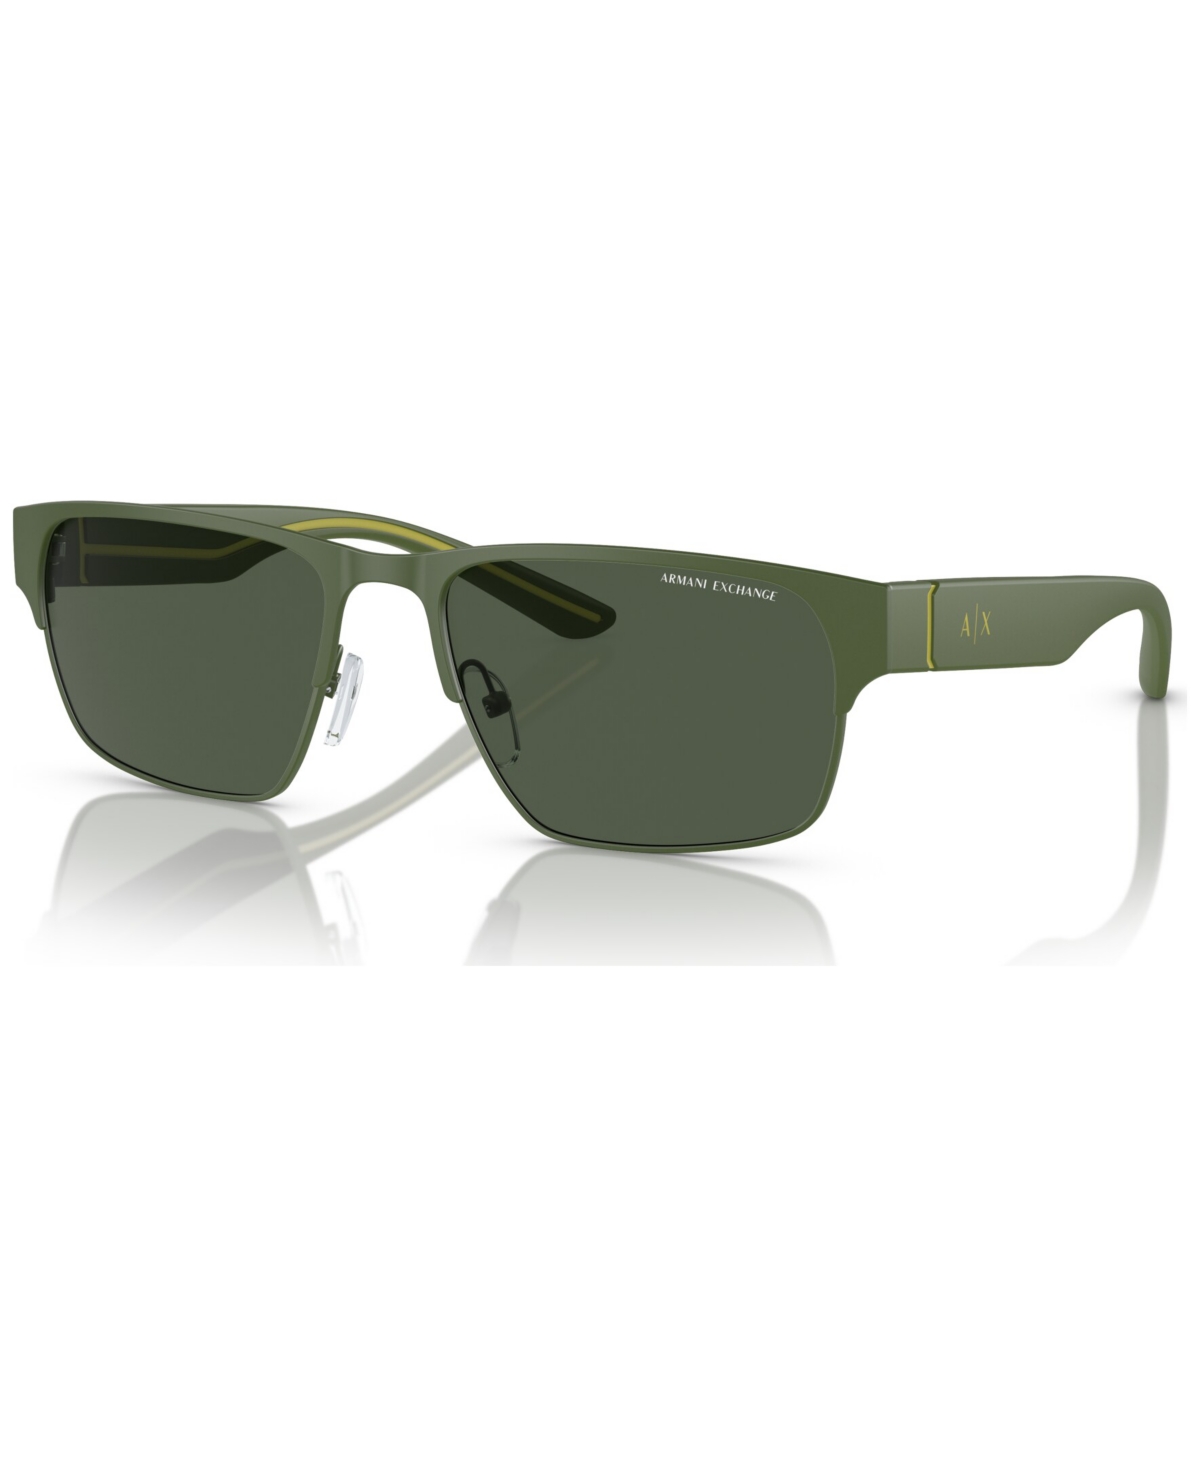 Ax Armani Exchange Men's Polarized Sunglasses, Ax2046s In Matte Olive